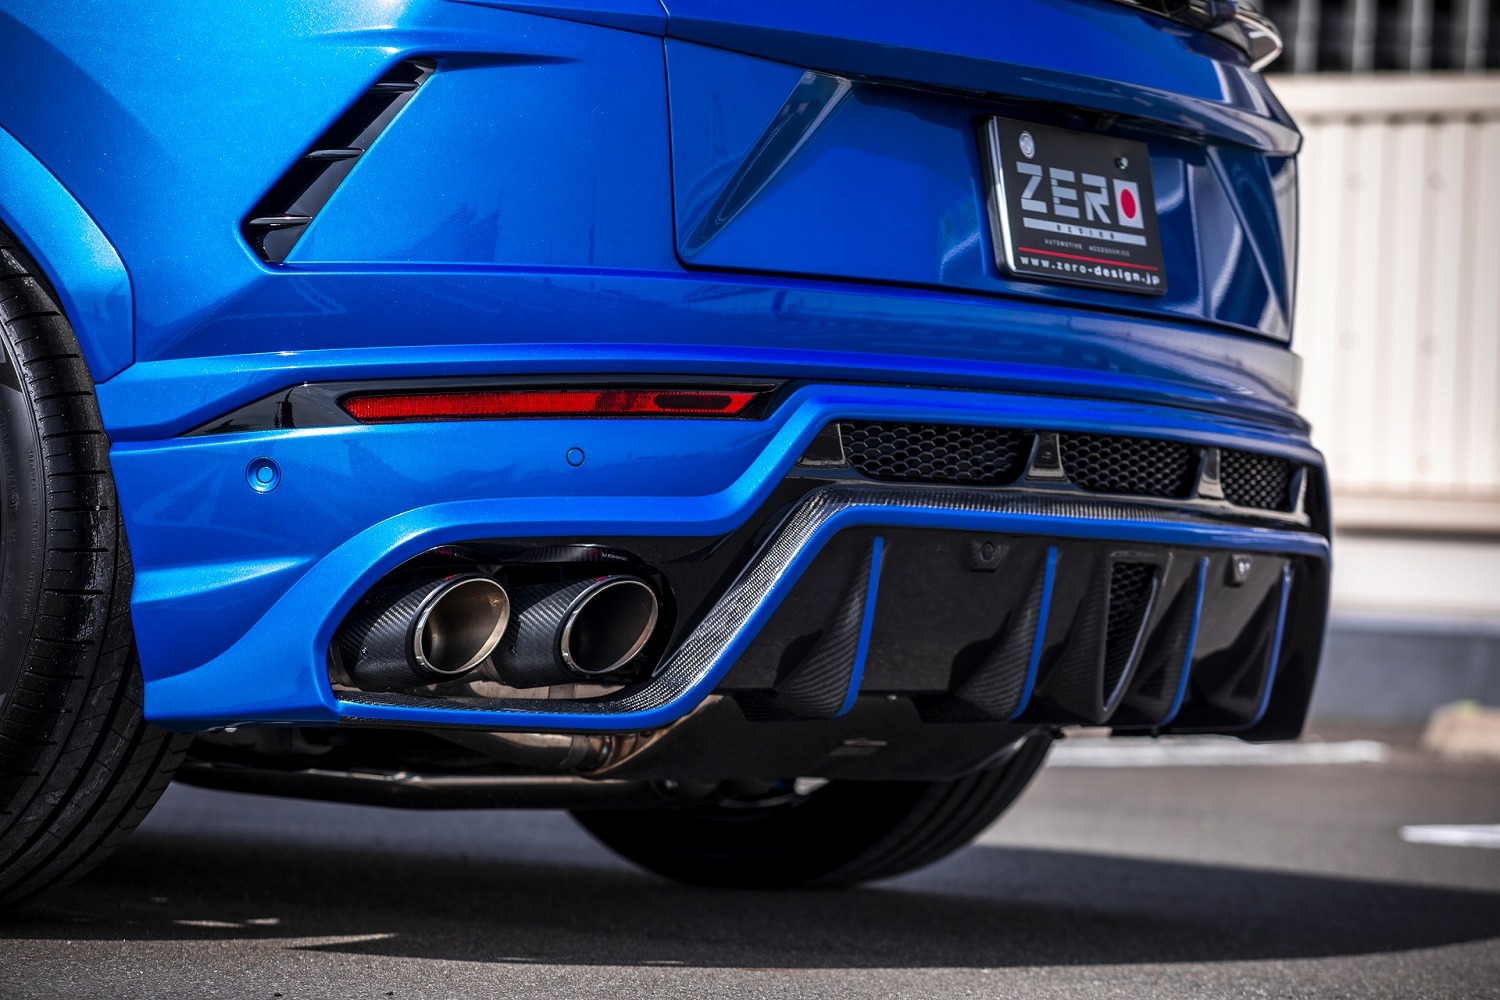 Zero Design body kit for Lamborghini URUS new model 2019